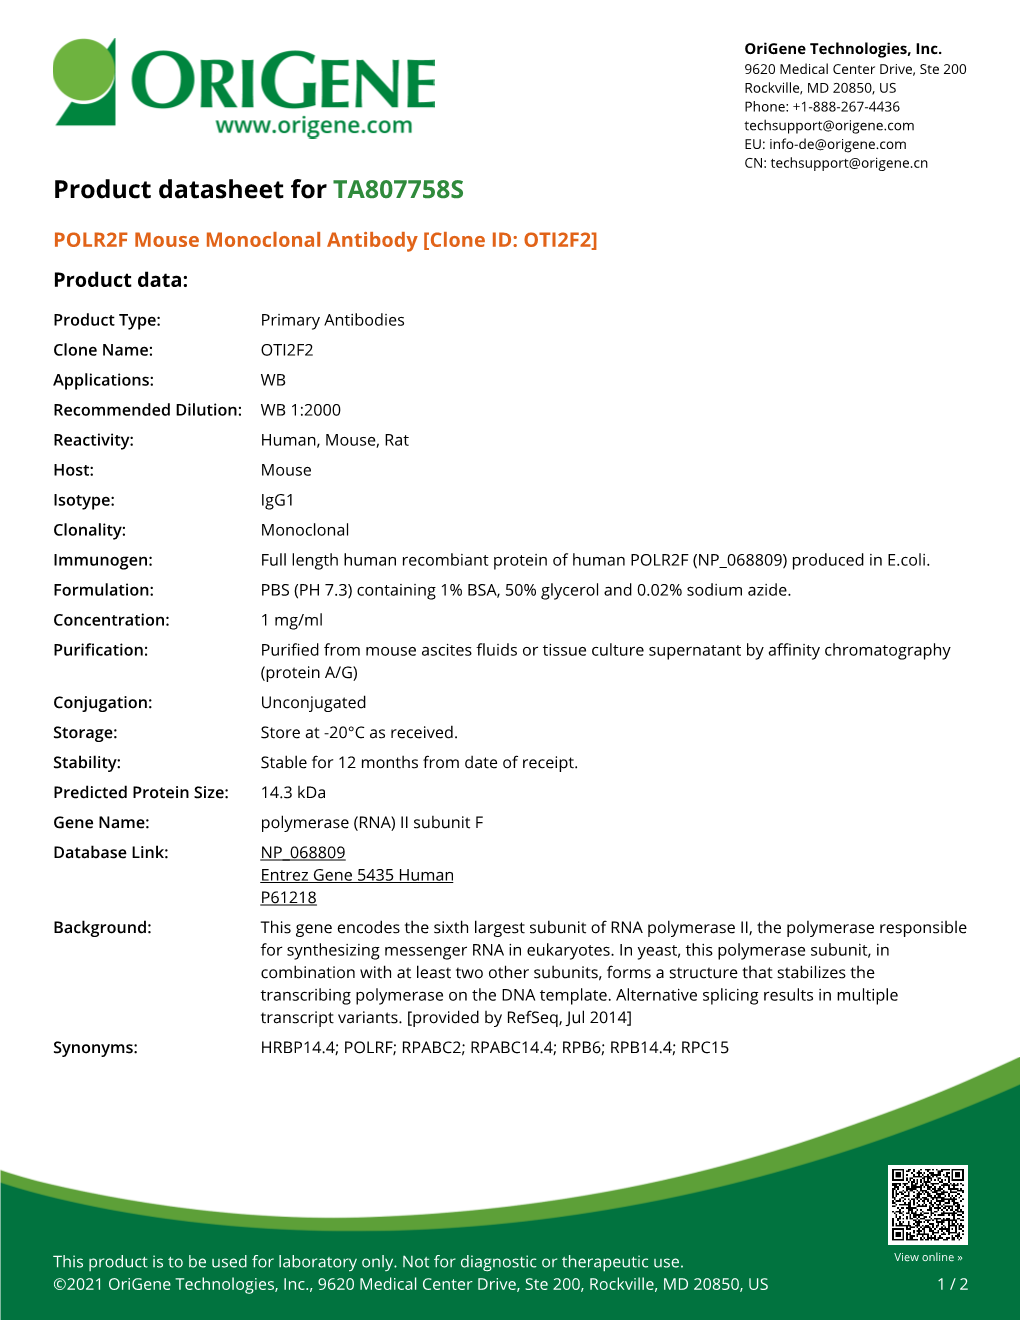 POLR2F Mouse Monoclonal Antibody [Clone ID: OTI2F2] Product Data